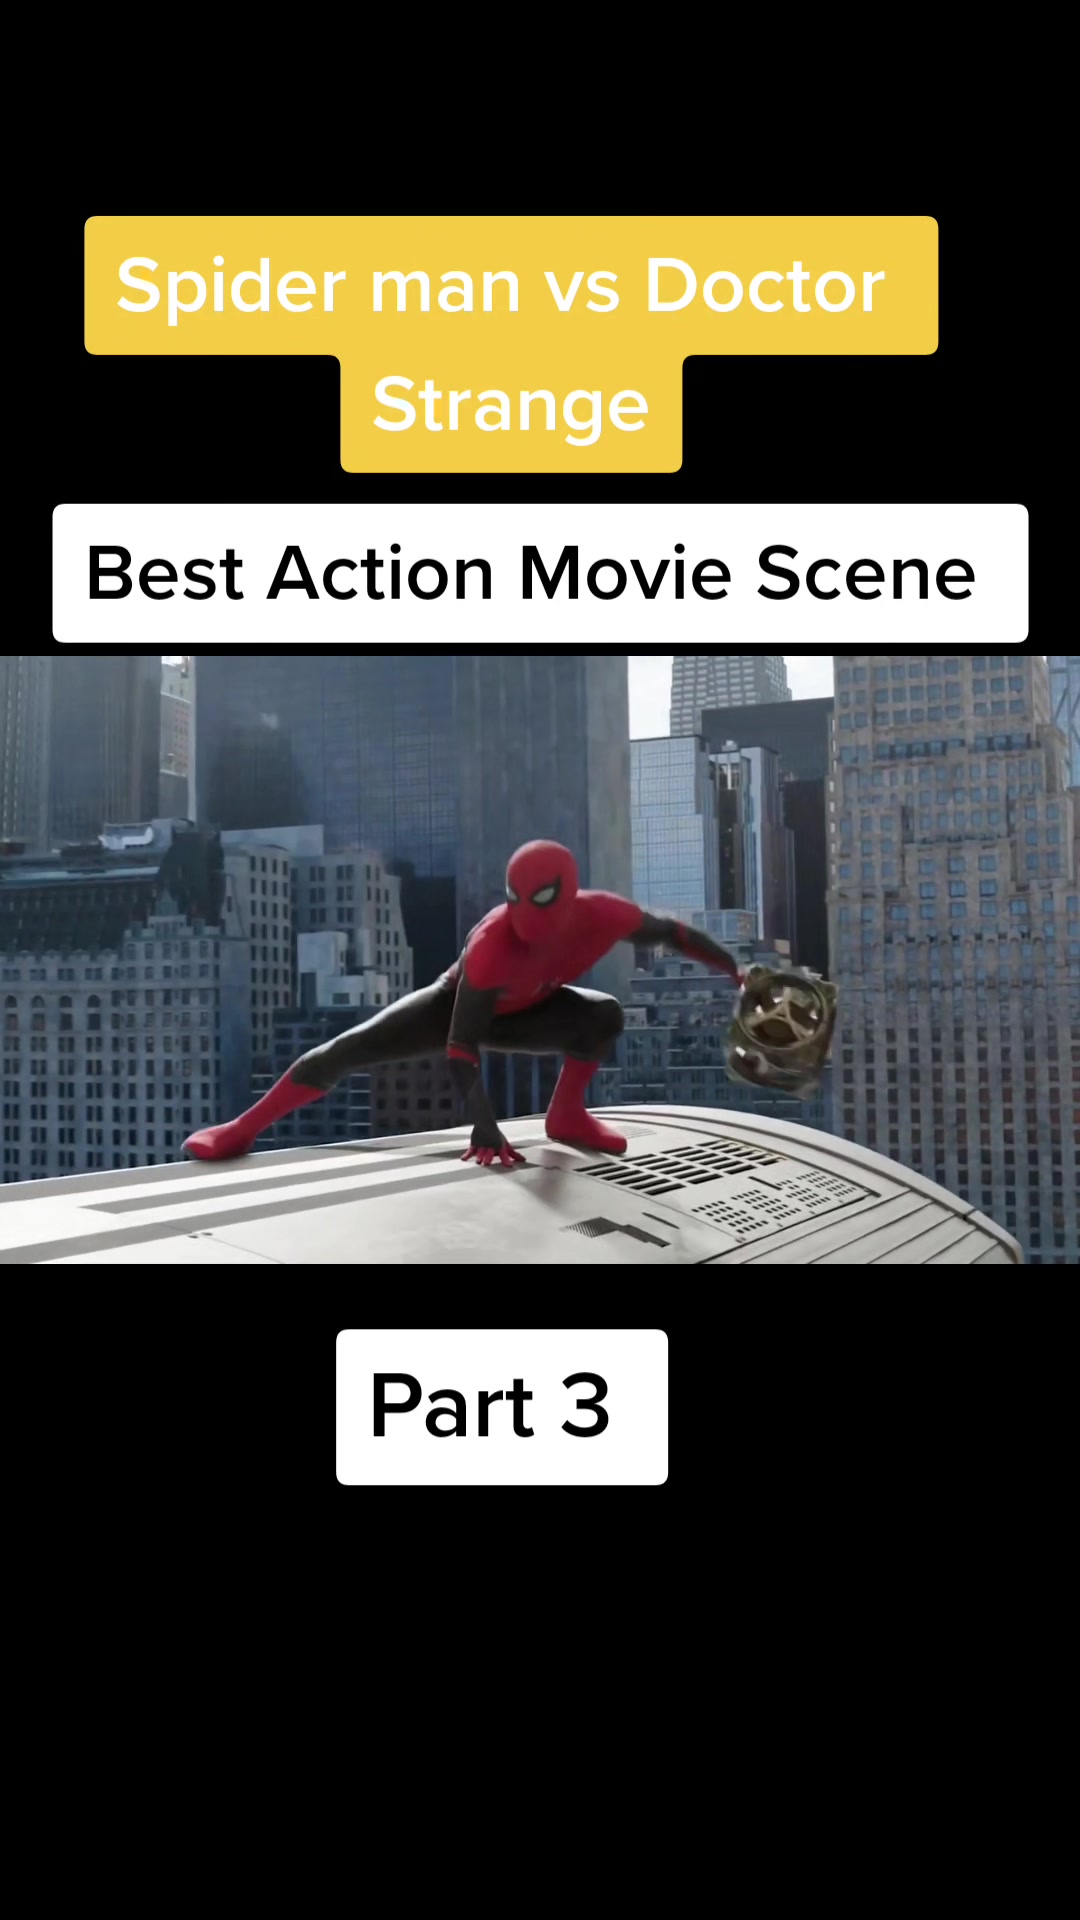 Action Movies scenes